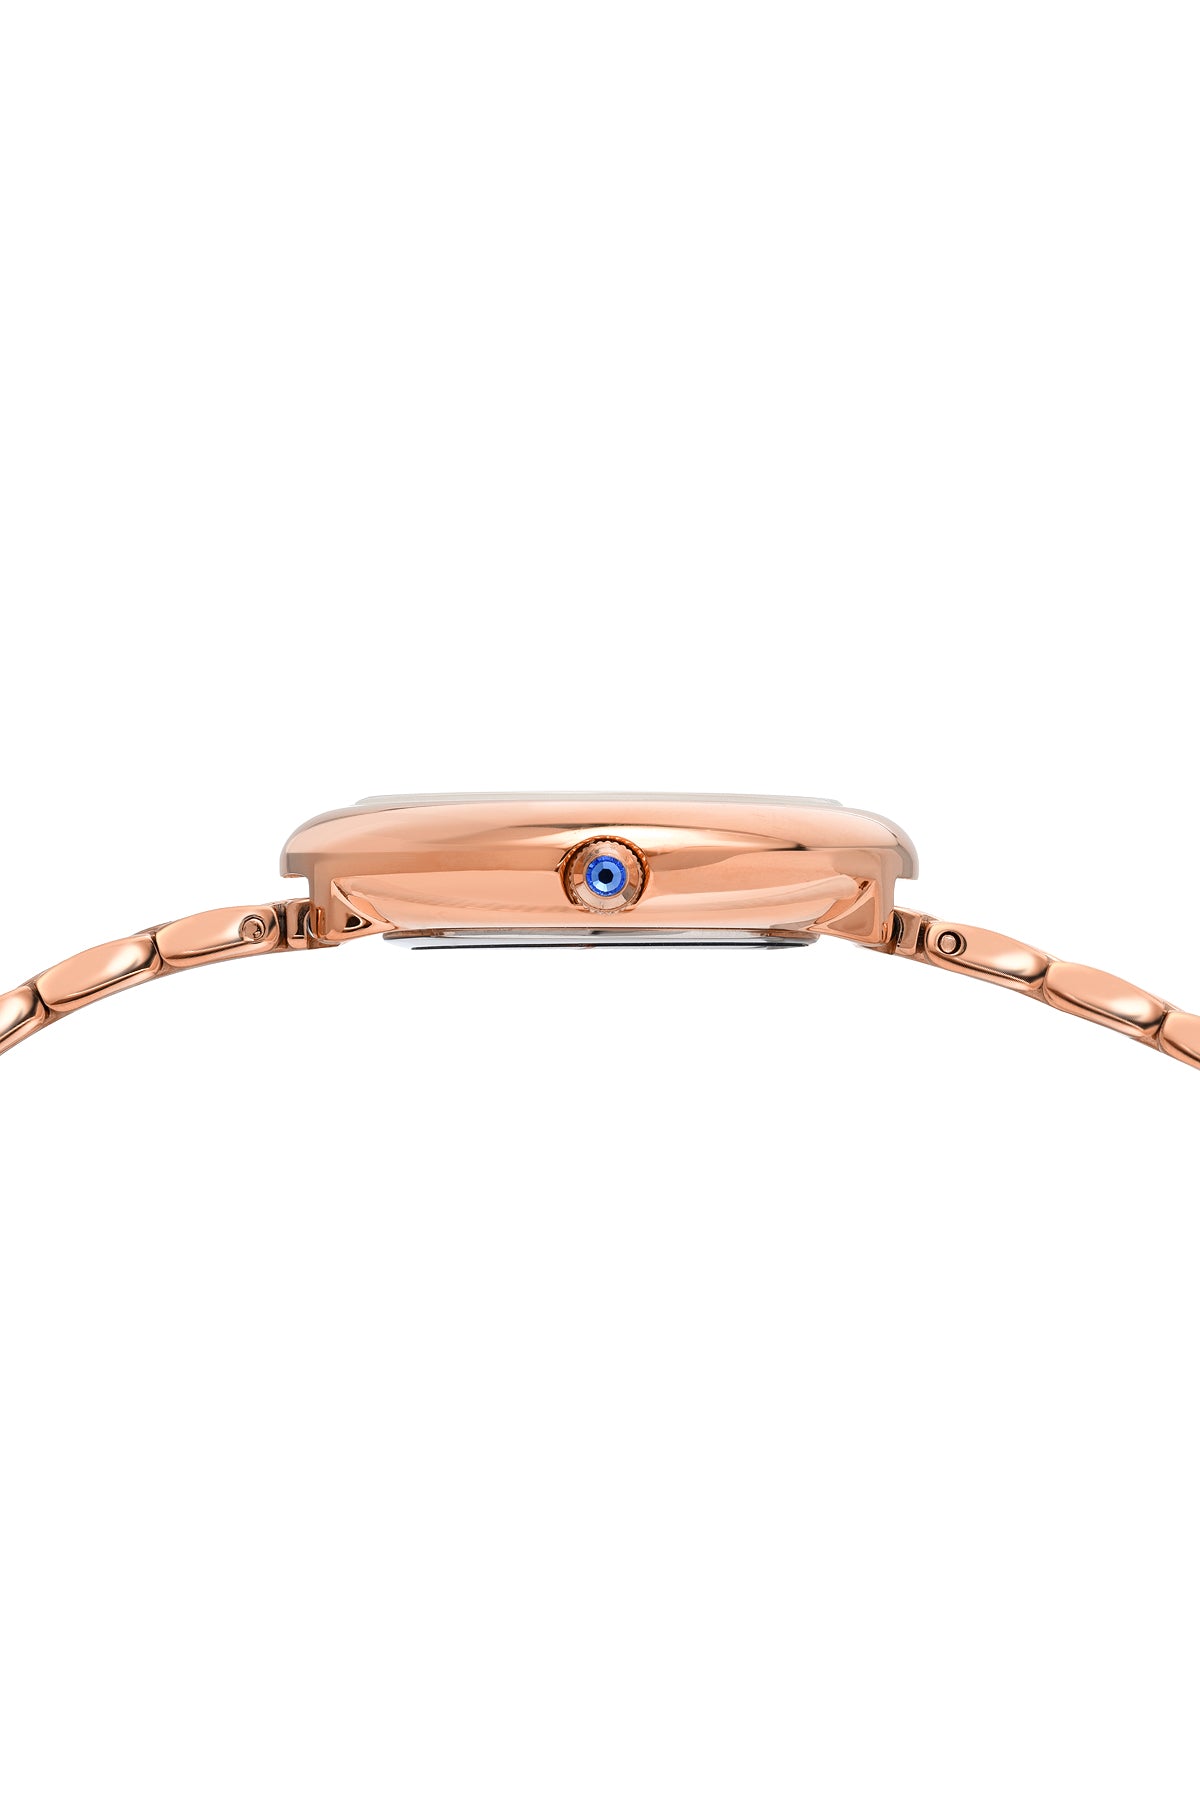 Porsamo Bleu Florentina Luxury Diamond Women's Stainless Steel Watch, White, Rose 901CFLS